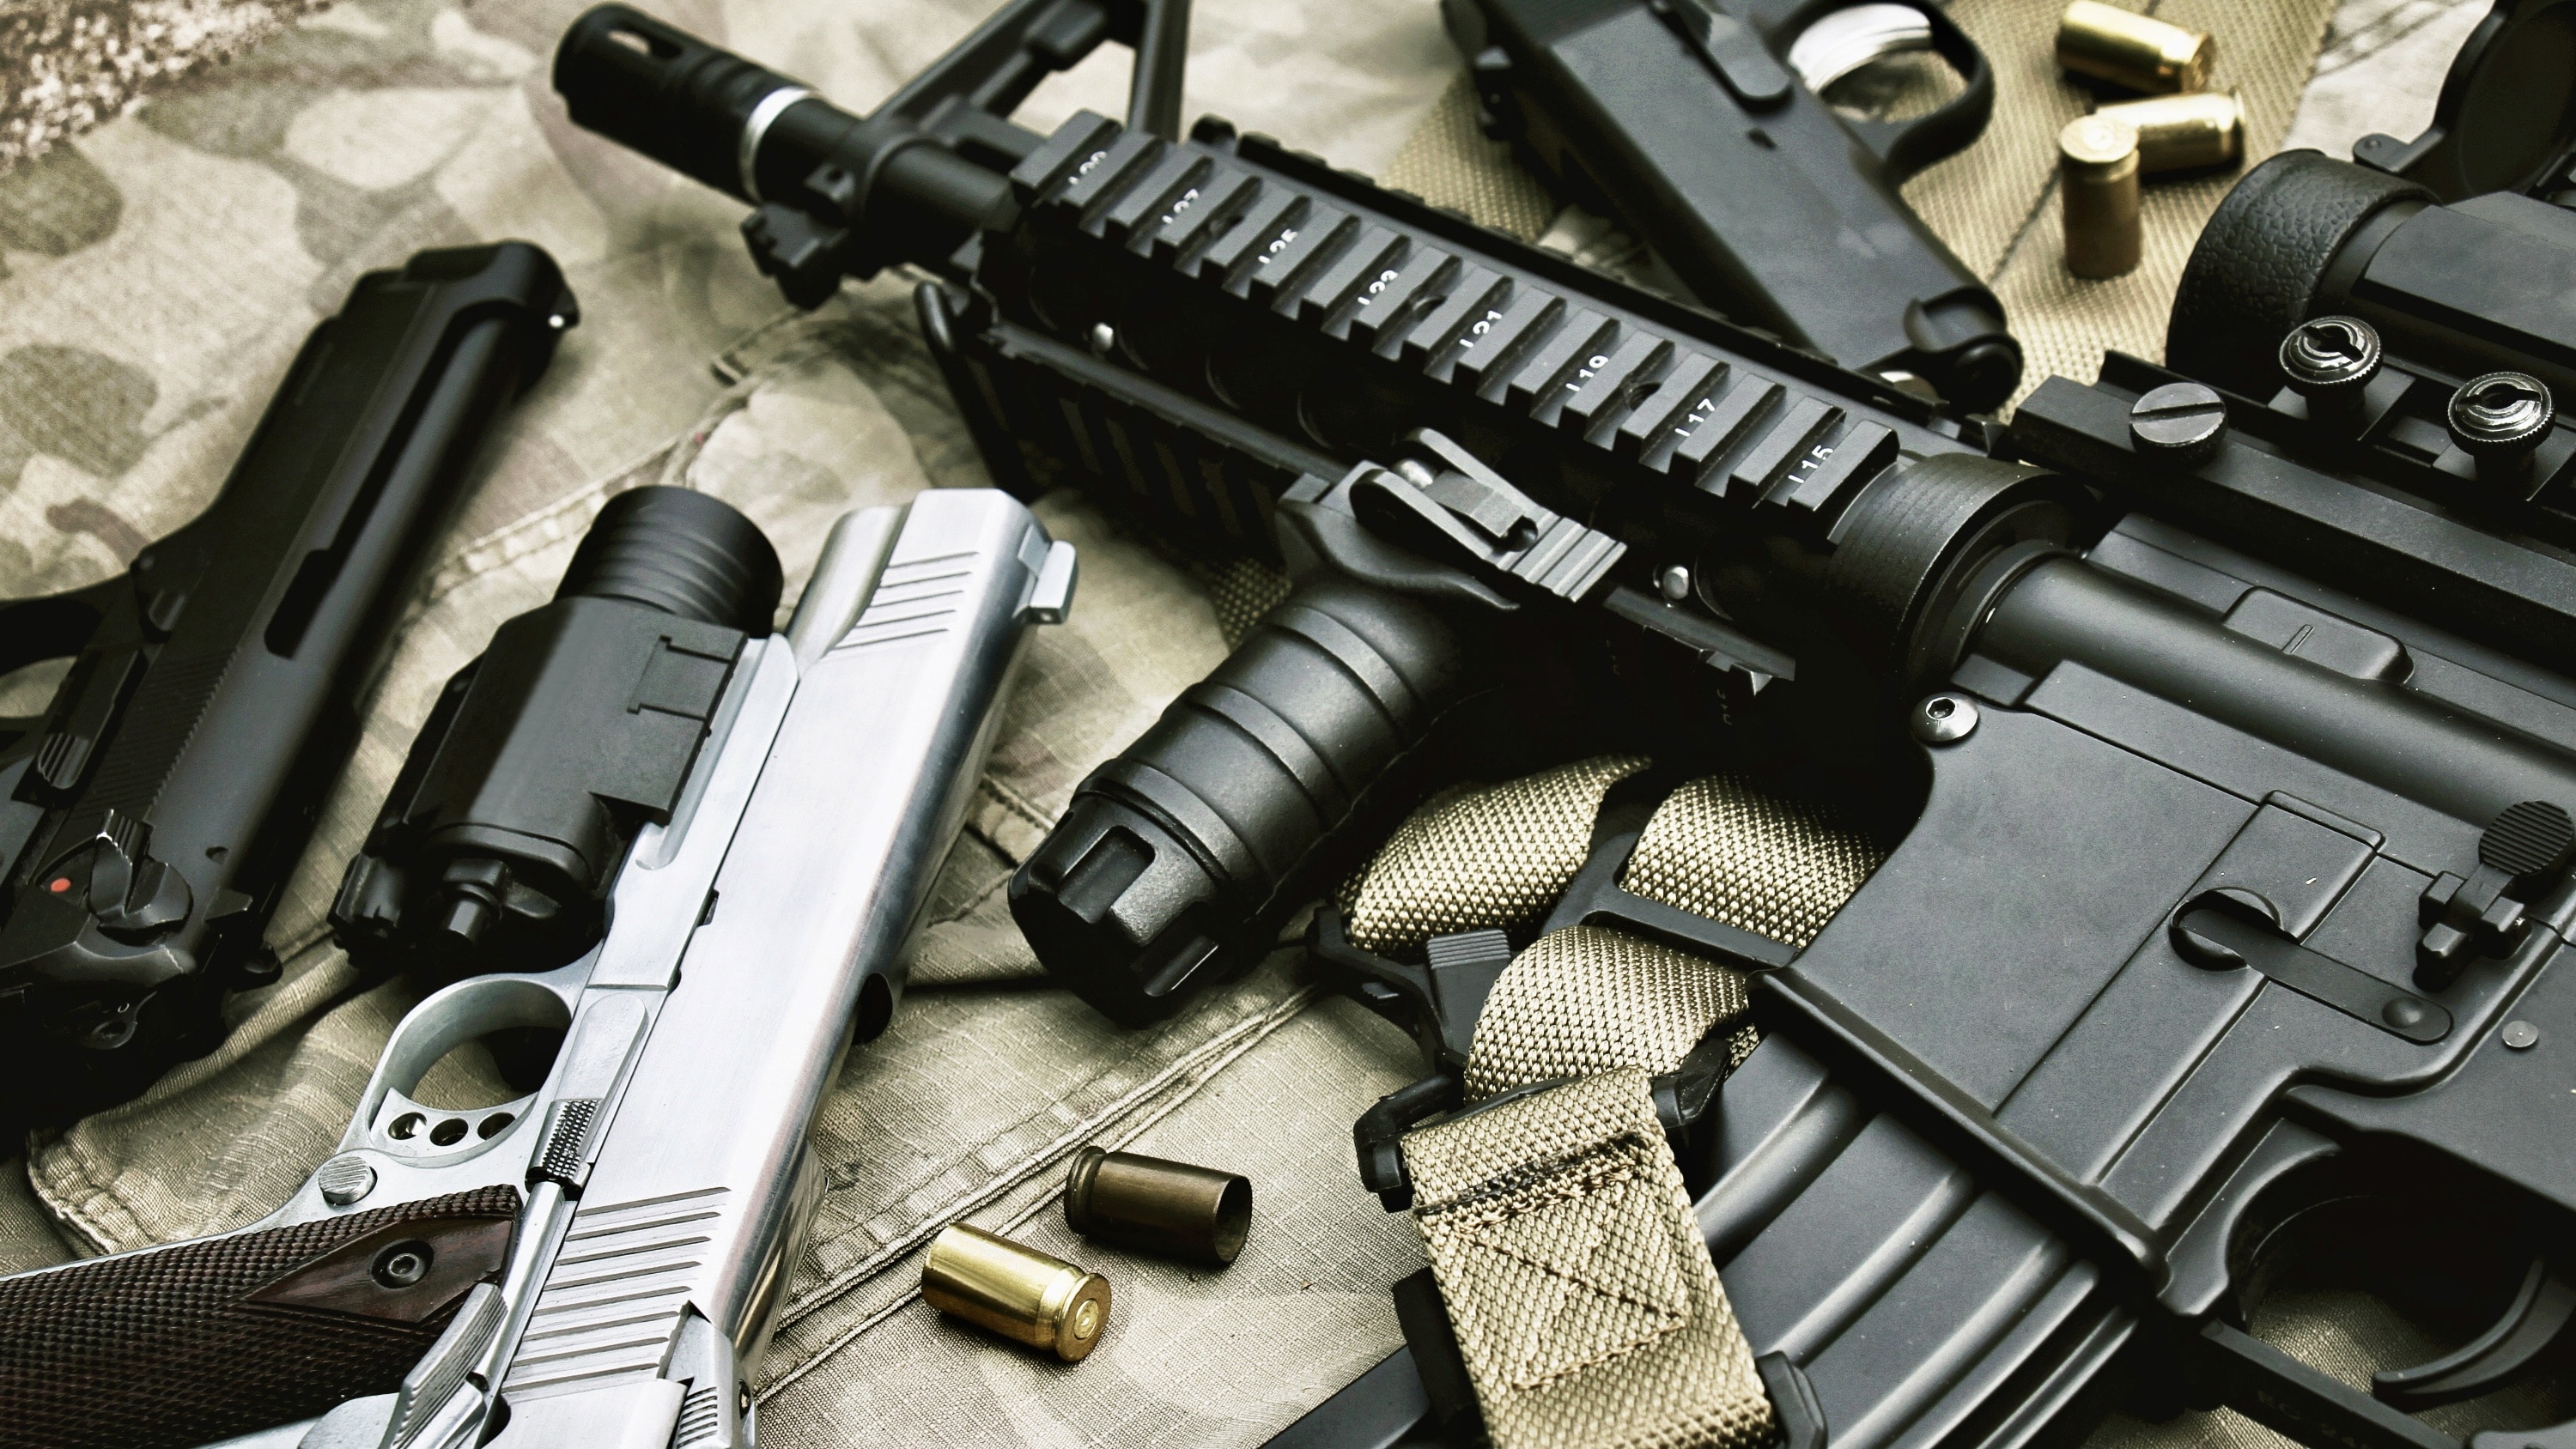 Rhode Island Governor and Advocates Introduce Gun Safety Legislation to